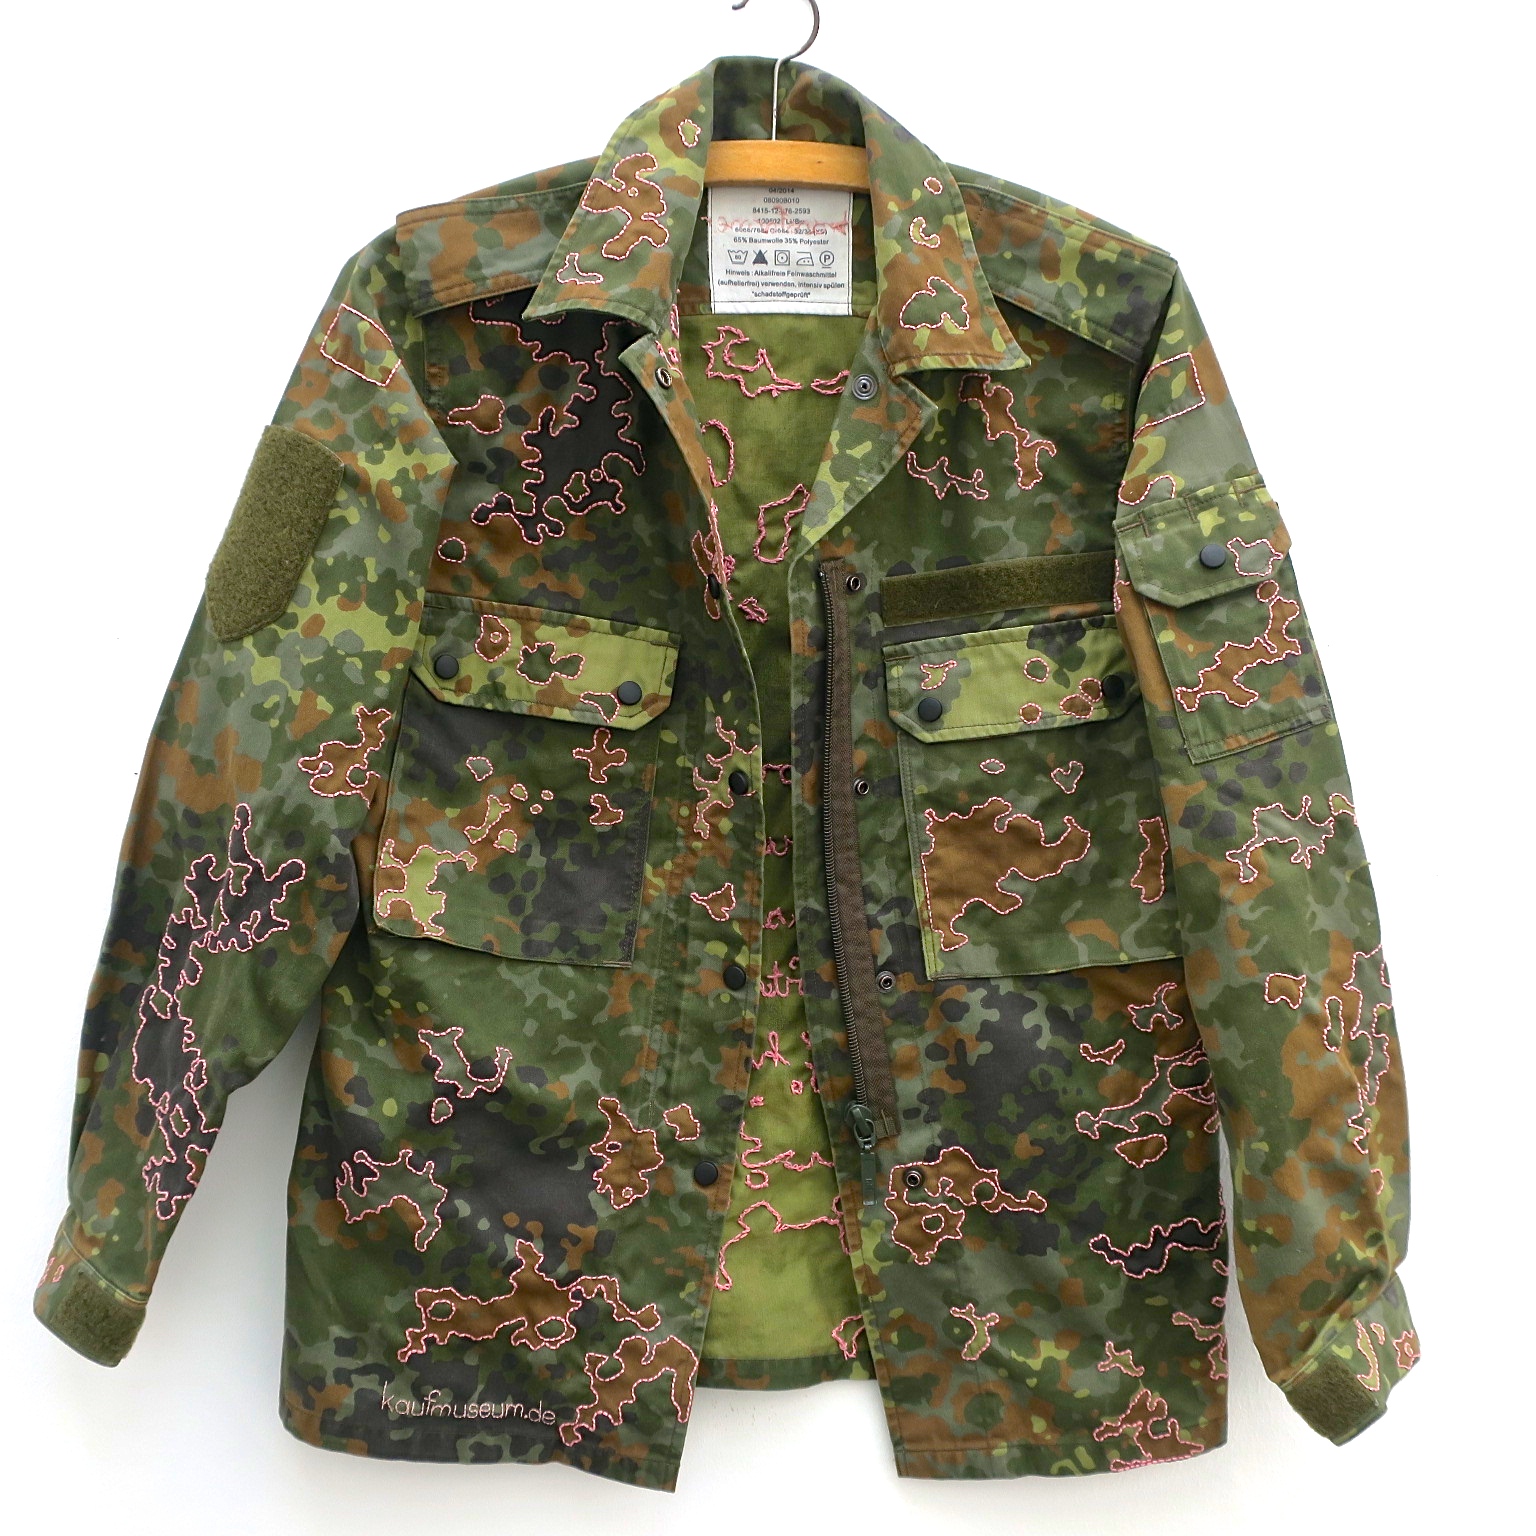 Camouflage military camu Kamouflage handgestickt embroidery slowfashion peace bestickt combat transformer ethicalfashion ethisch 